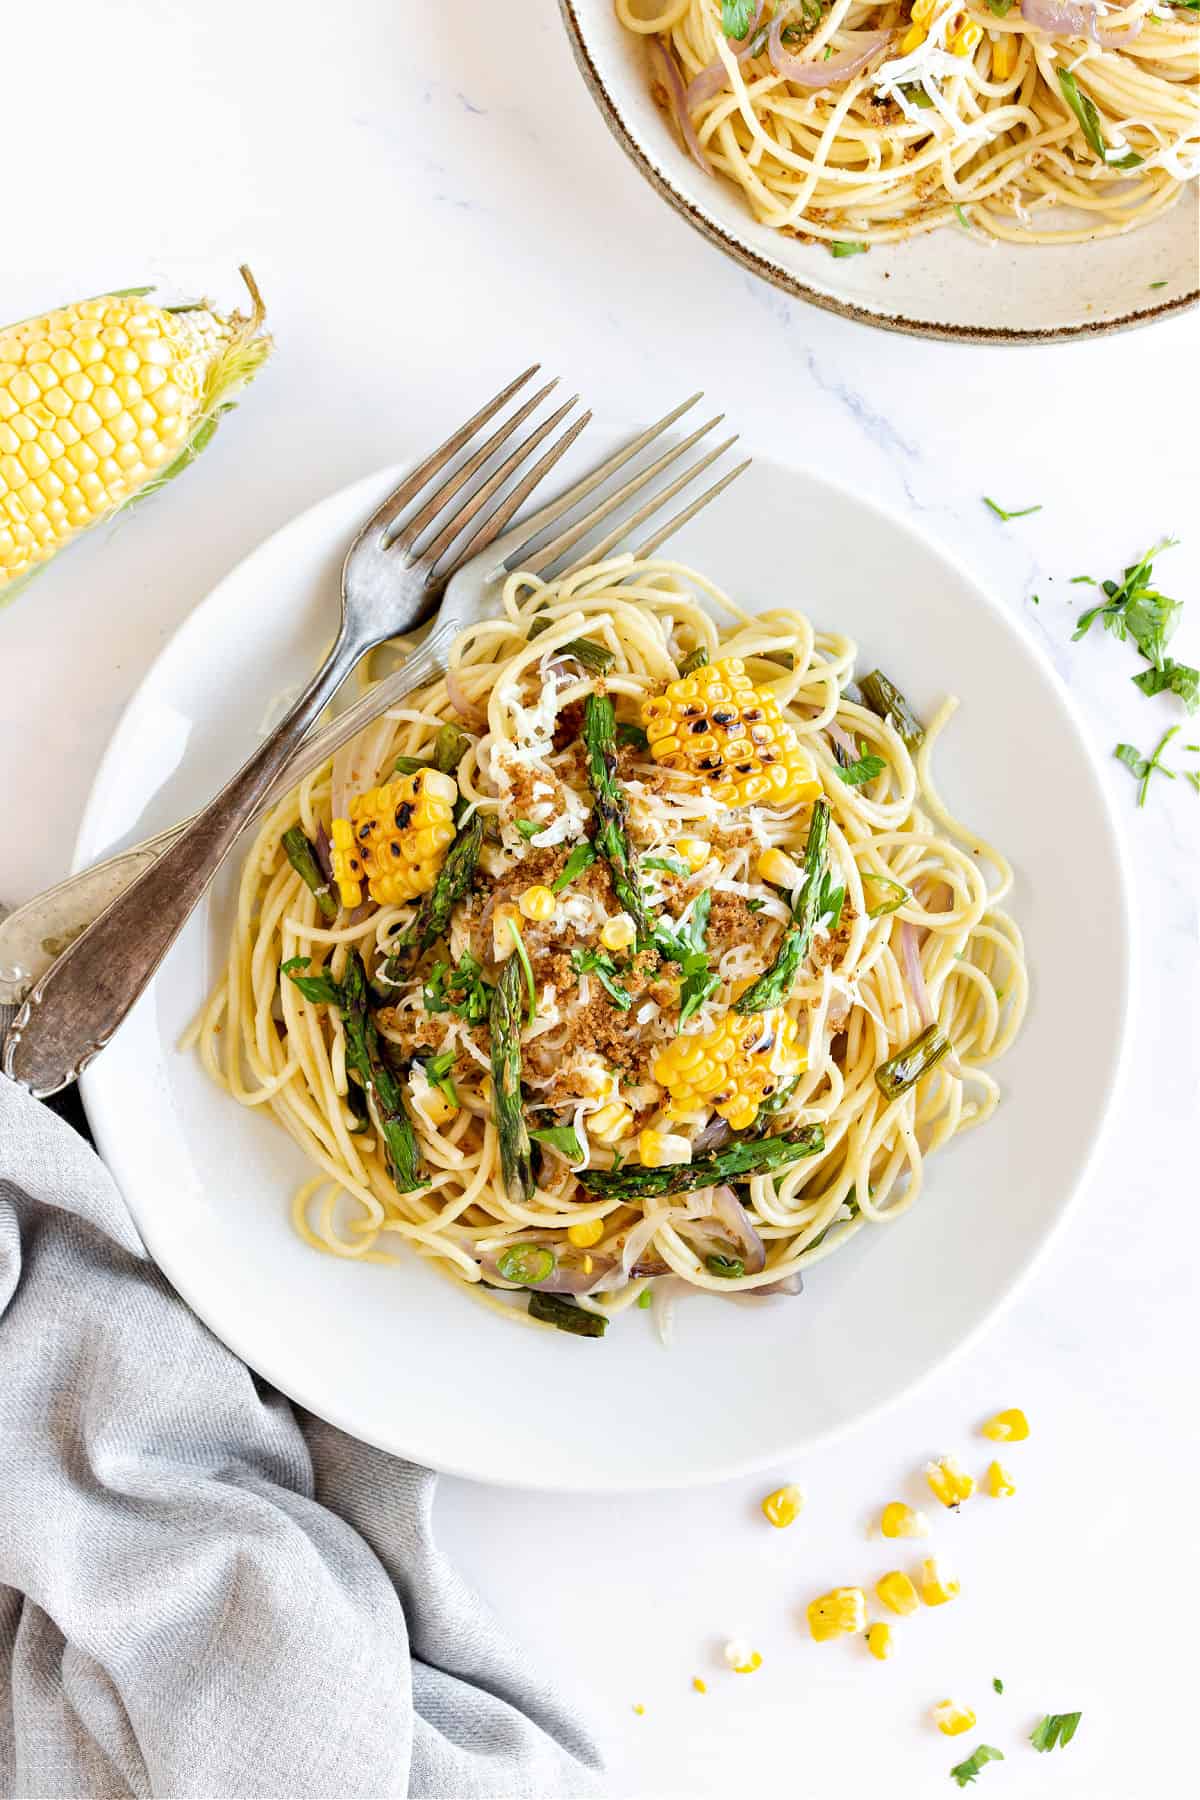 White plates with asparagus corn spaghetti. White background. Silver forks.